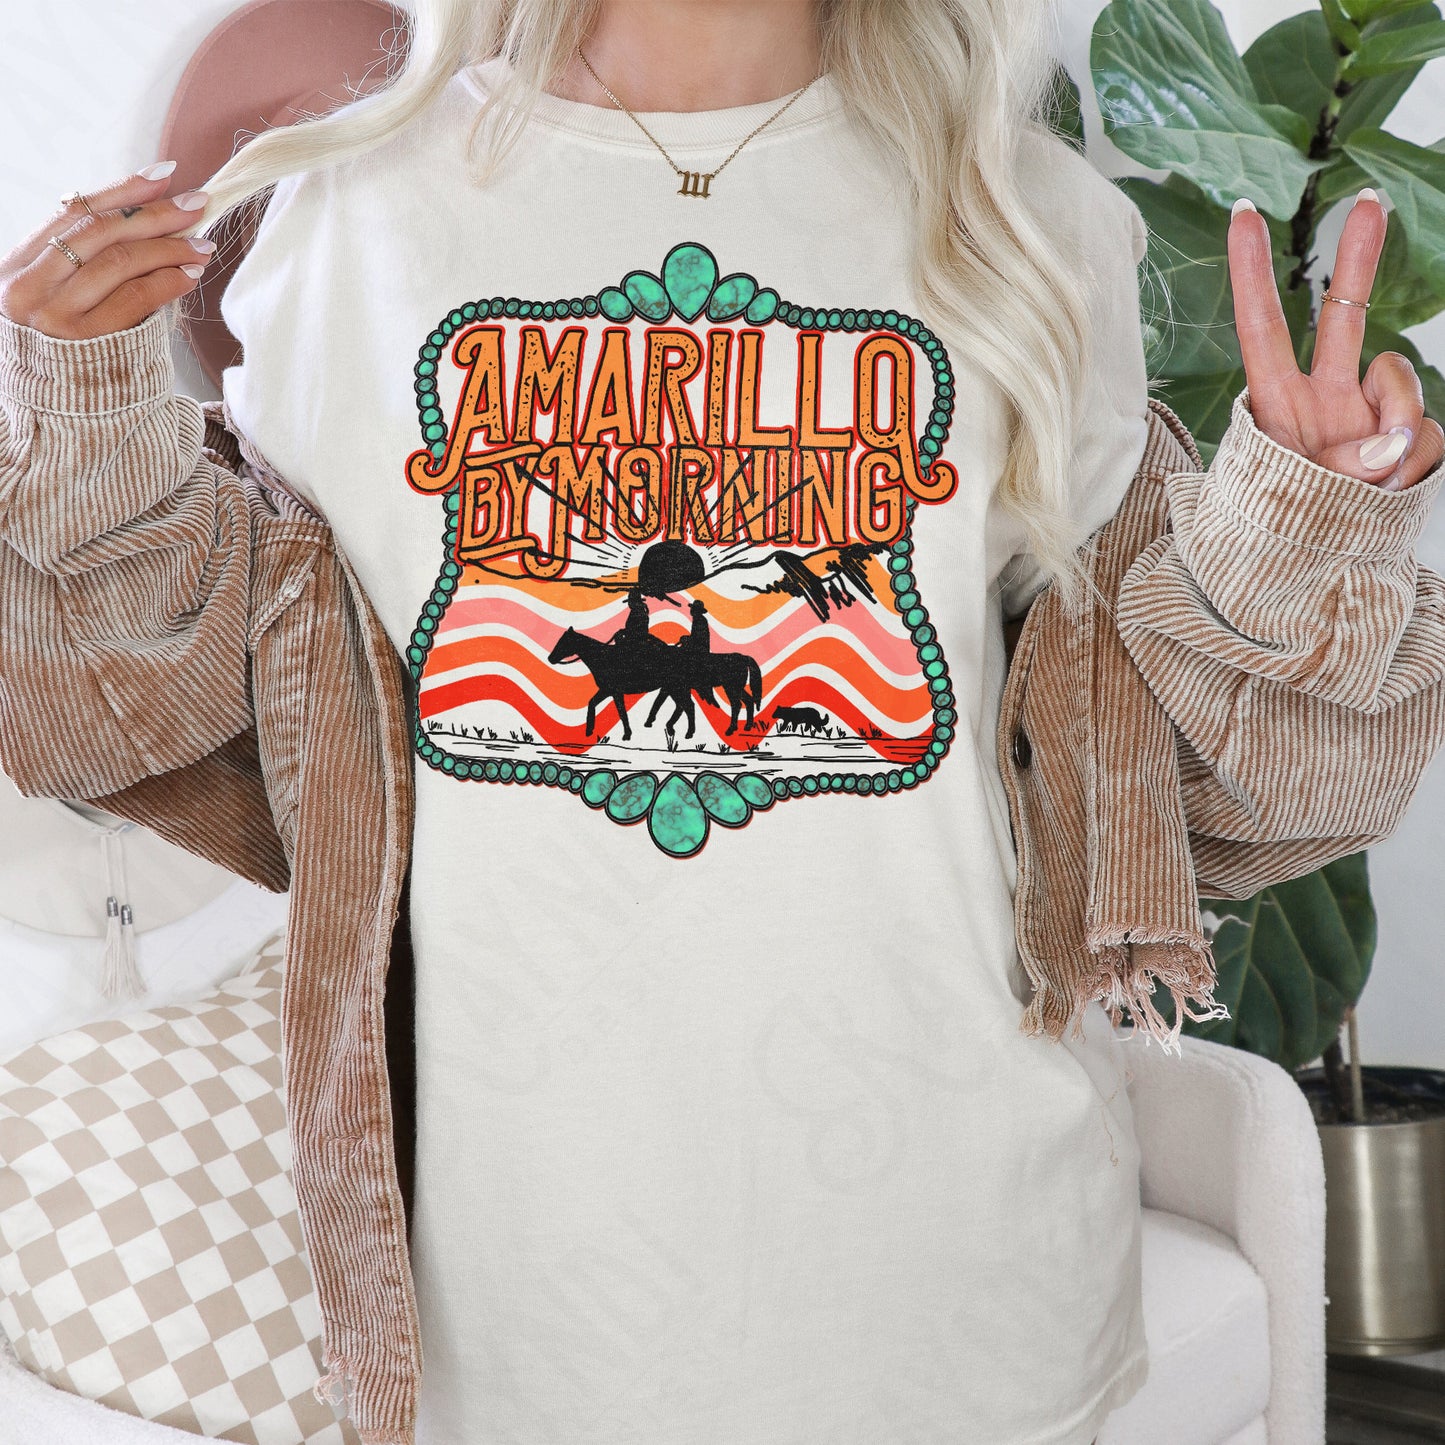 Amarillo By Morning Sublimation Design PNG Digital Download Printable